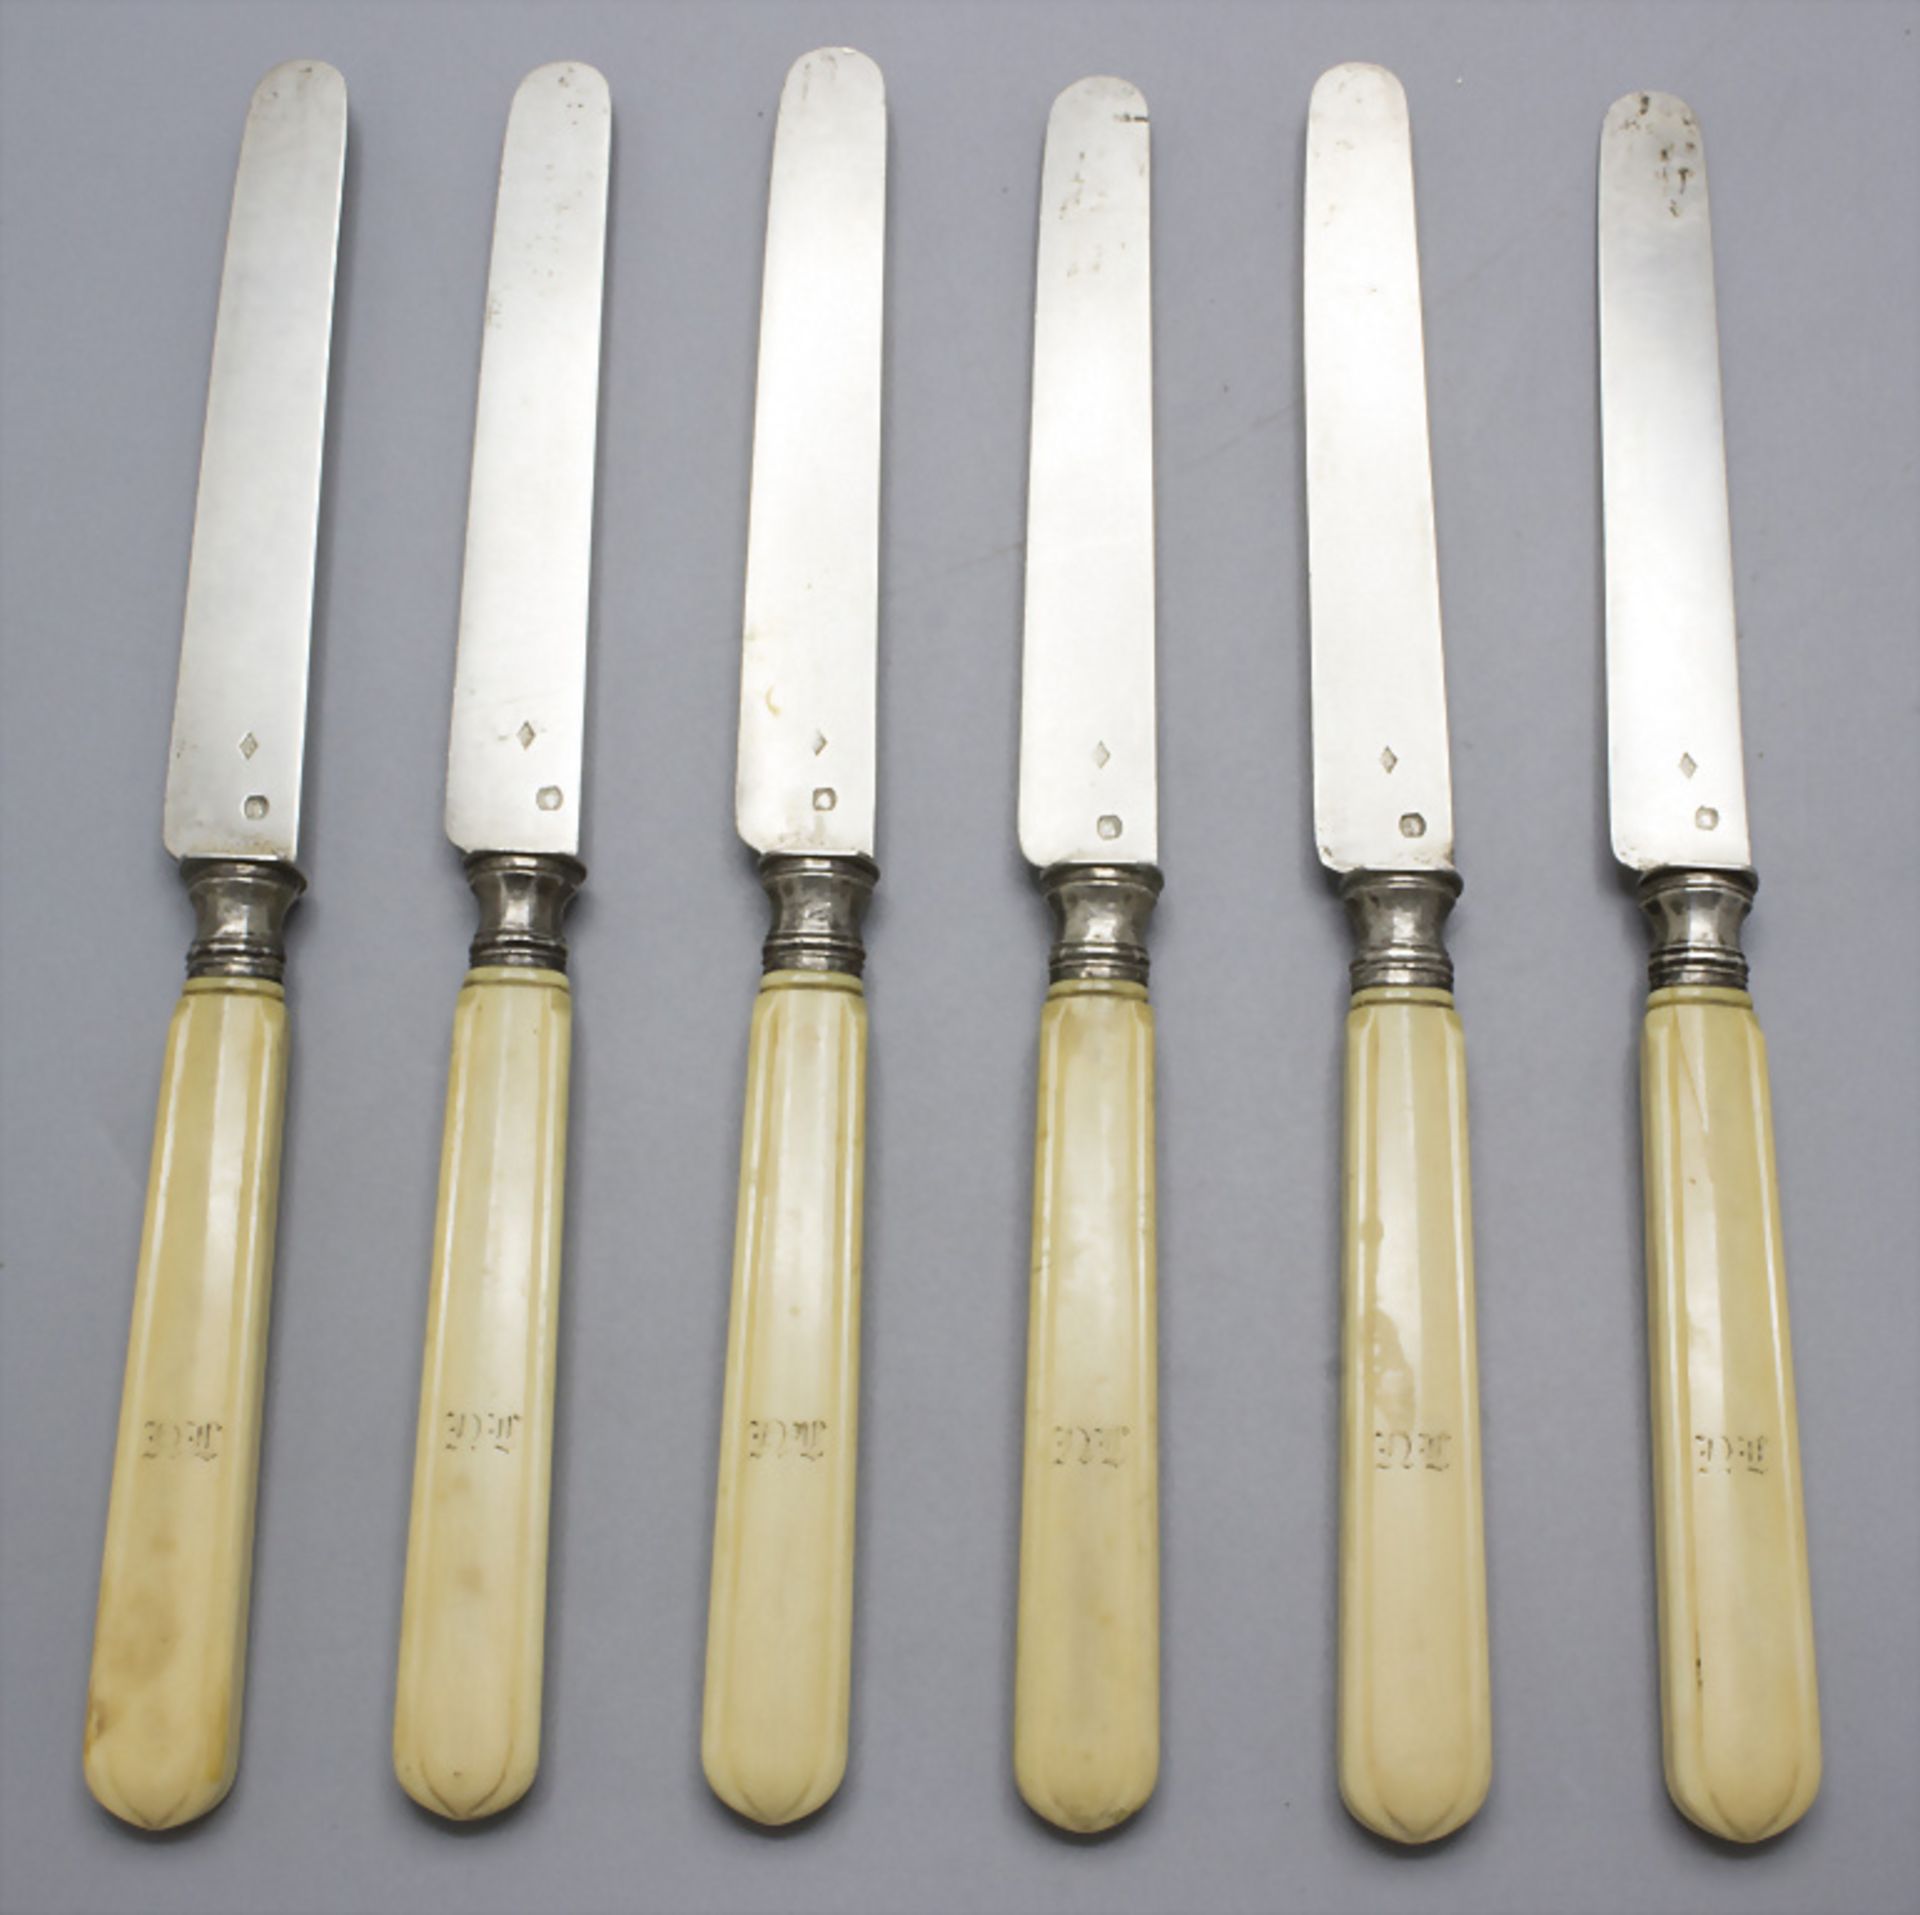 6 Obst-/Dessertmesser / 6 silver fruit/dessert knives, Louis Bricogne, Paris, Ende 19. Jh.